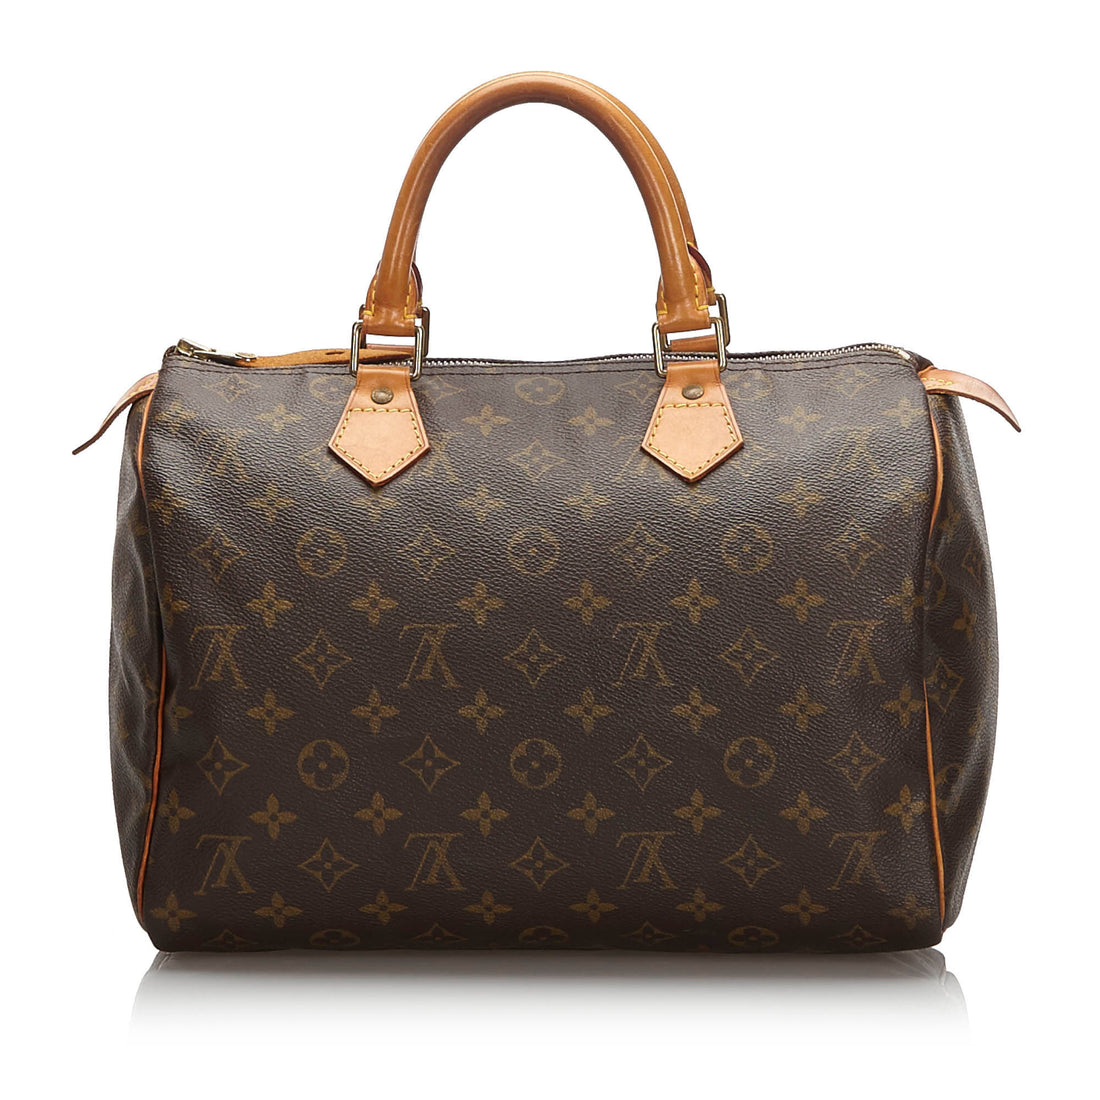 Tất cả những gì bạn cần biết về túi Louis Vuitton Speedy  Harpers Bazaar